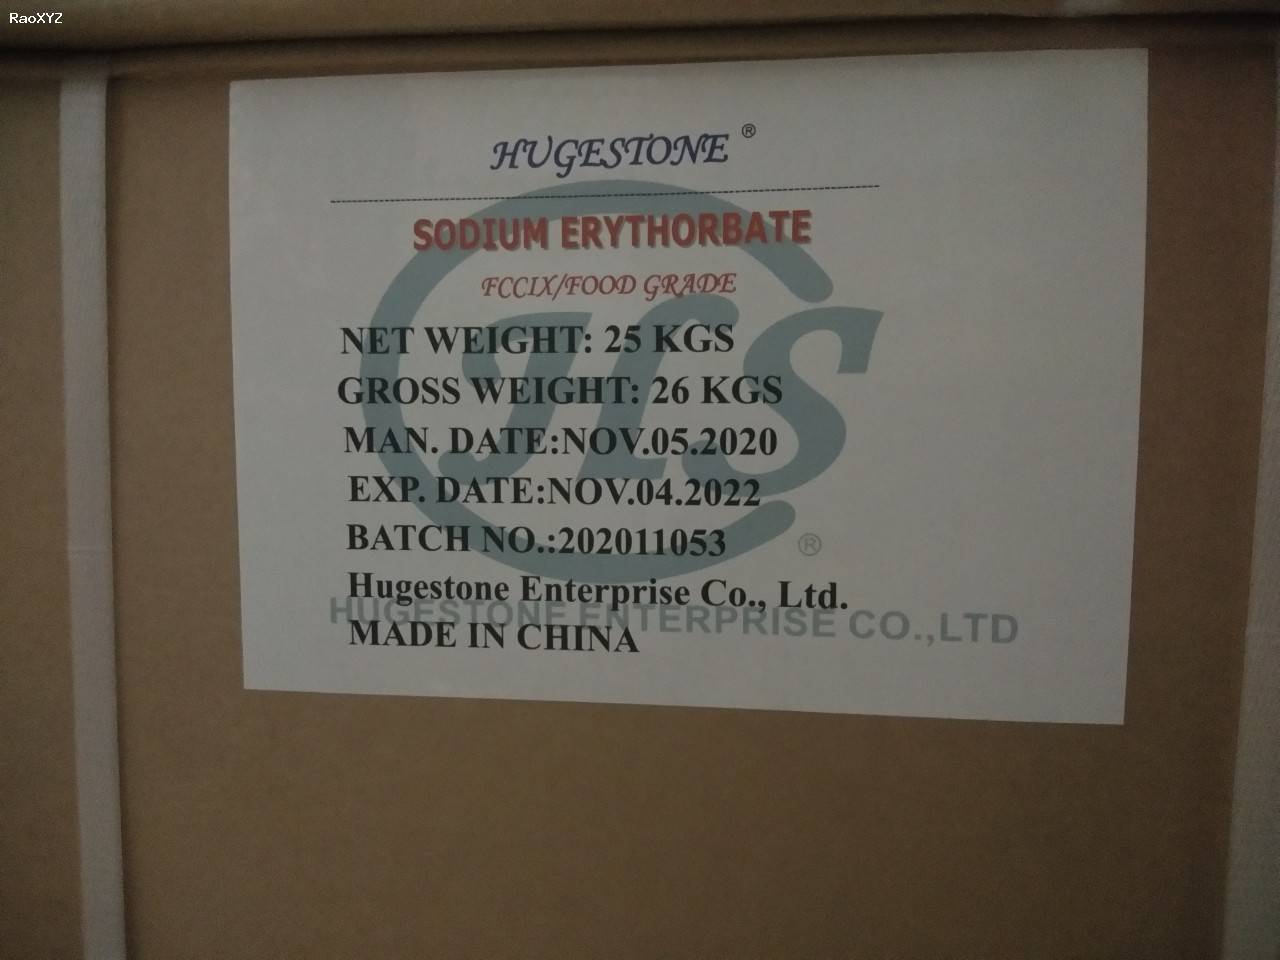 Sodium Erythorbate - Sodium Erybate - E316 - Chất chống oxy hóa, bảo quản thực phẩm